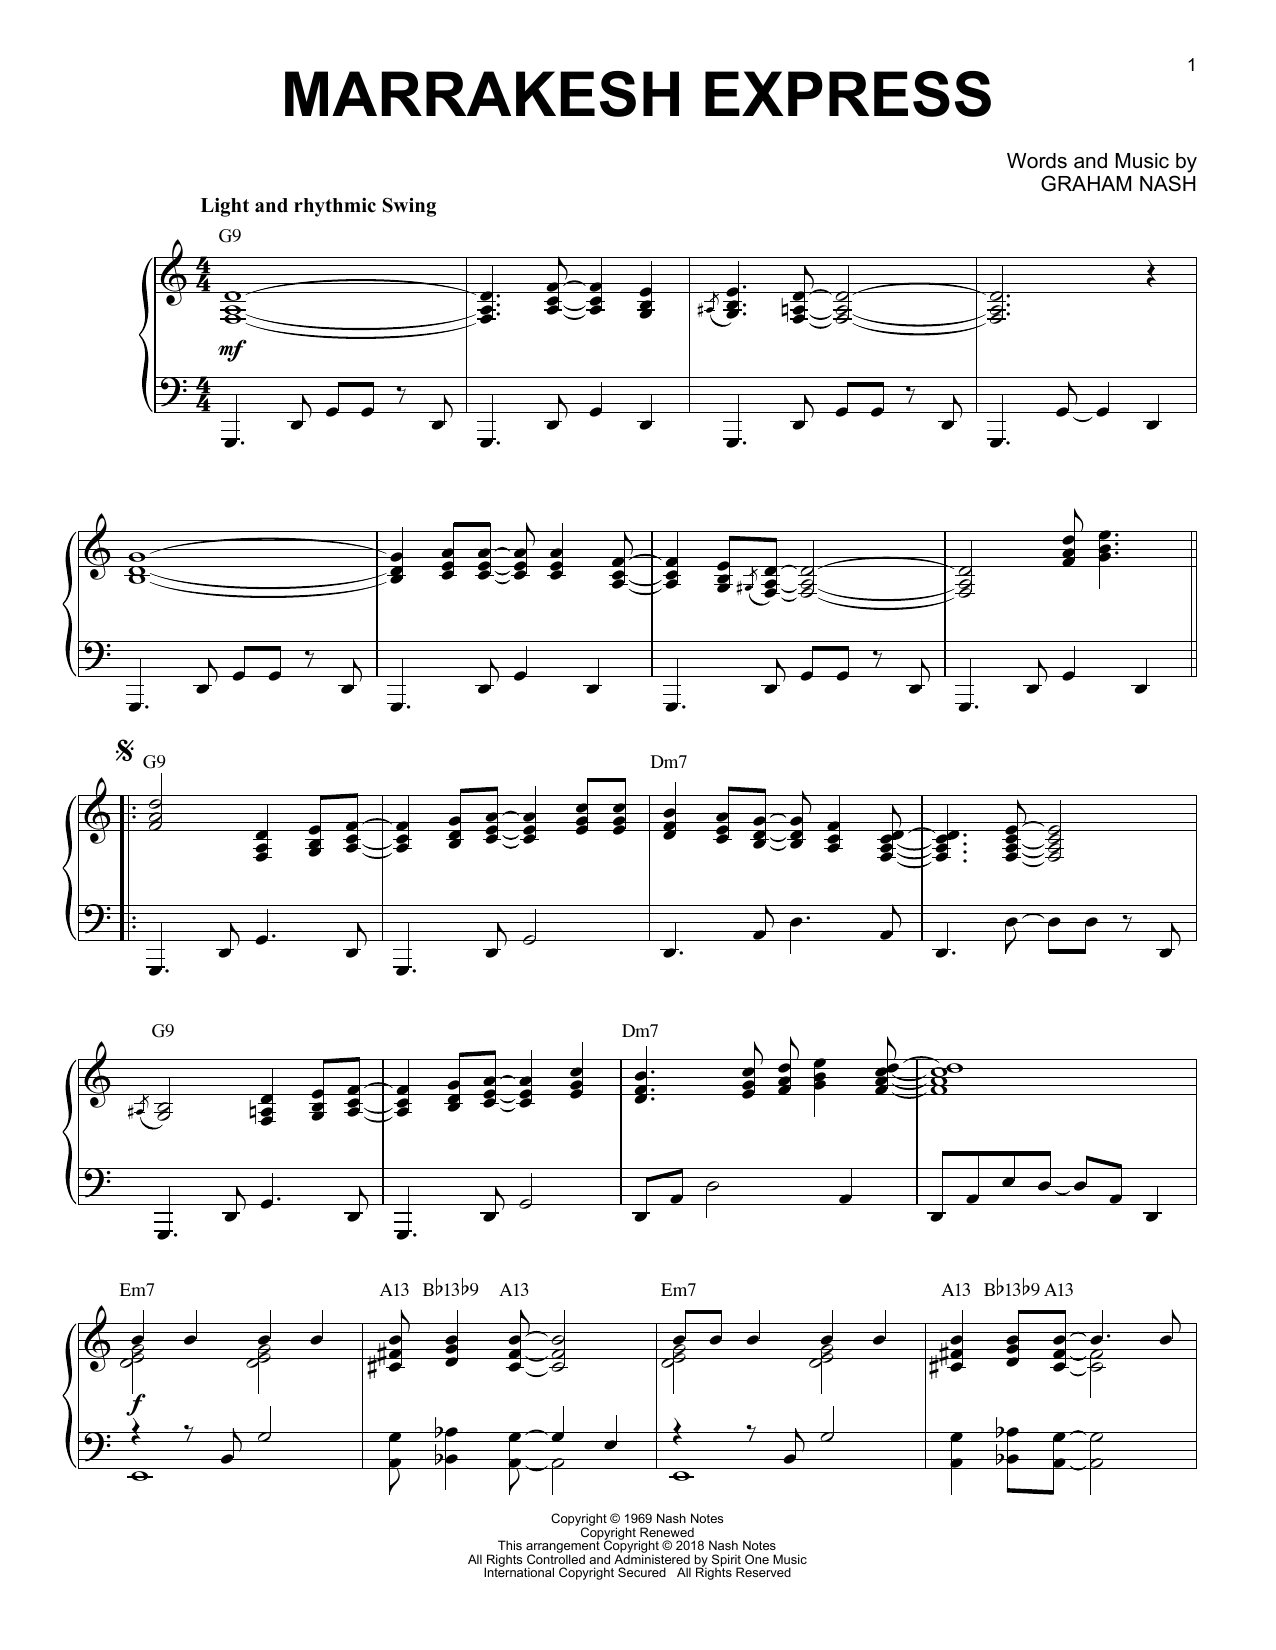 Crosby, Stills & Nash Marrakesh Express [Jazz version] Sheet Music Notes & Chords for Piano - Download or Print PDF